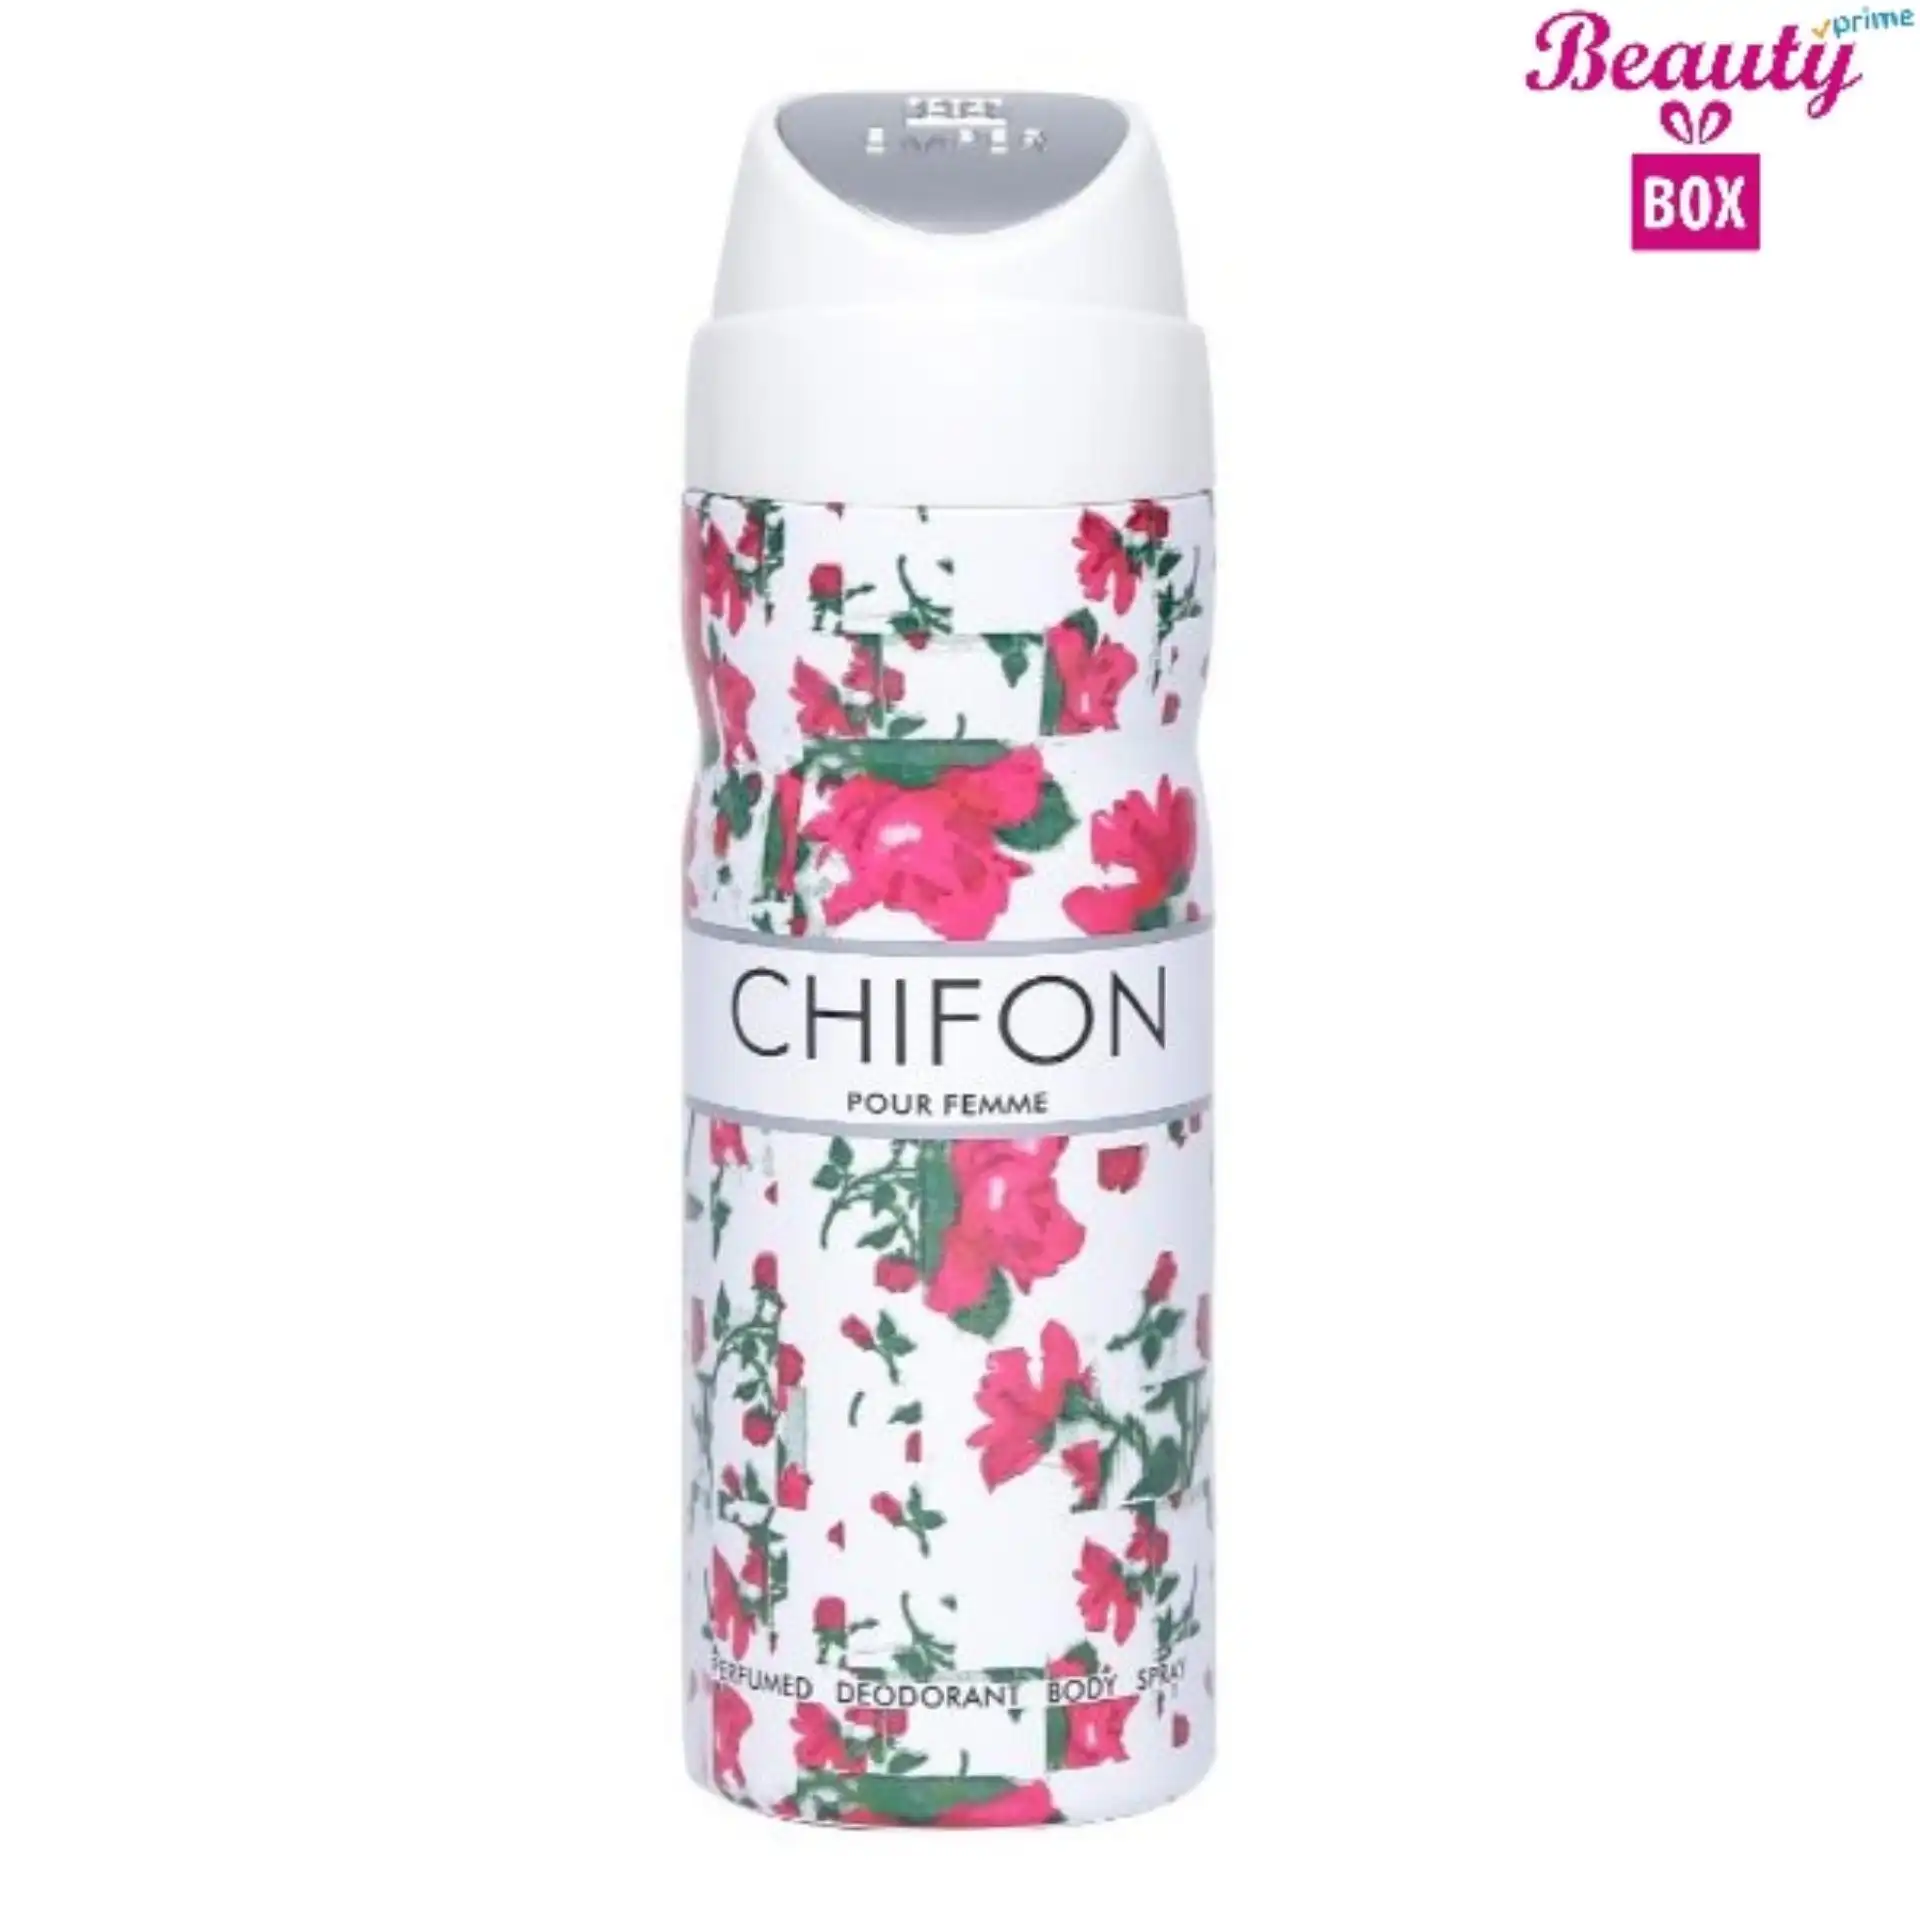 Emper Chifon Deodorant Body Spray For Women - 200Ml